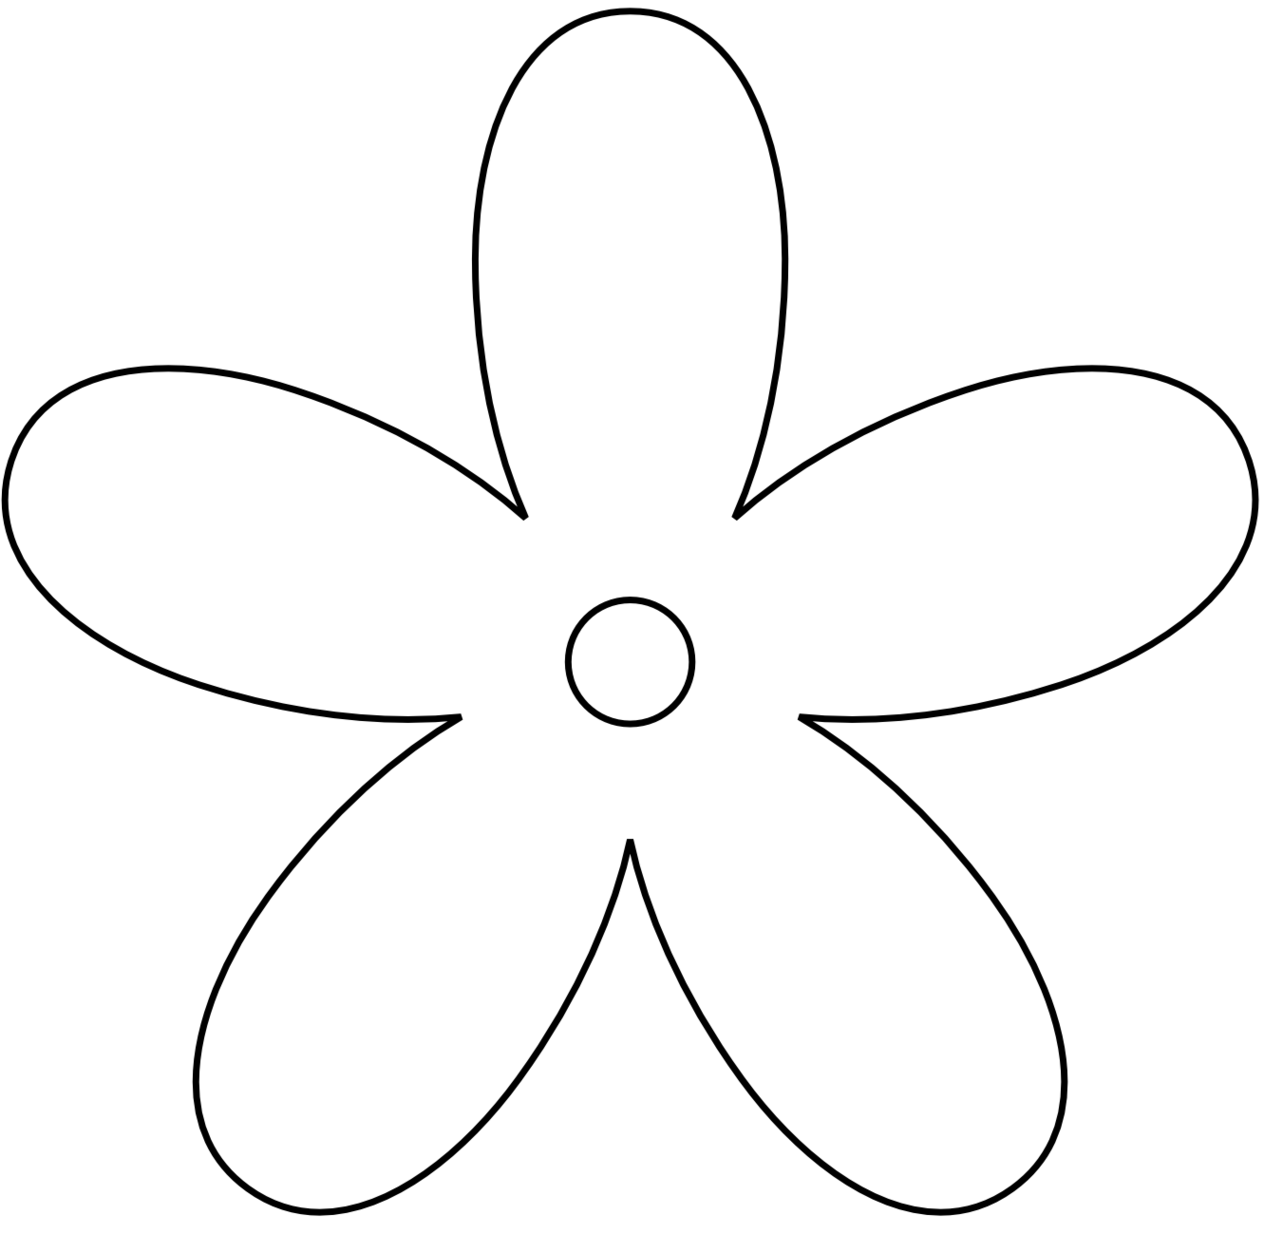 Clipart black and white flower - ClipartFox